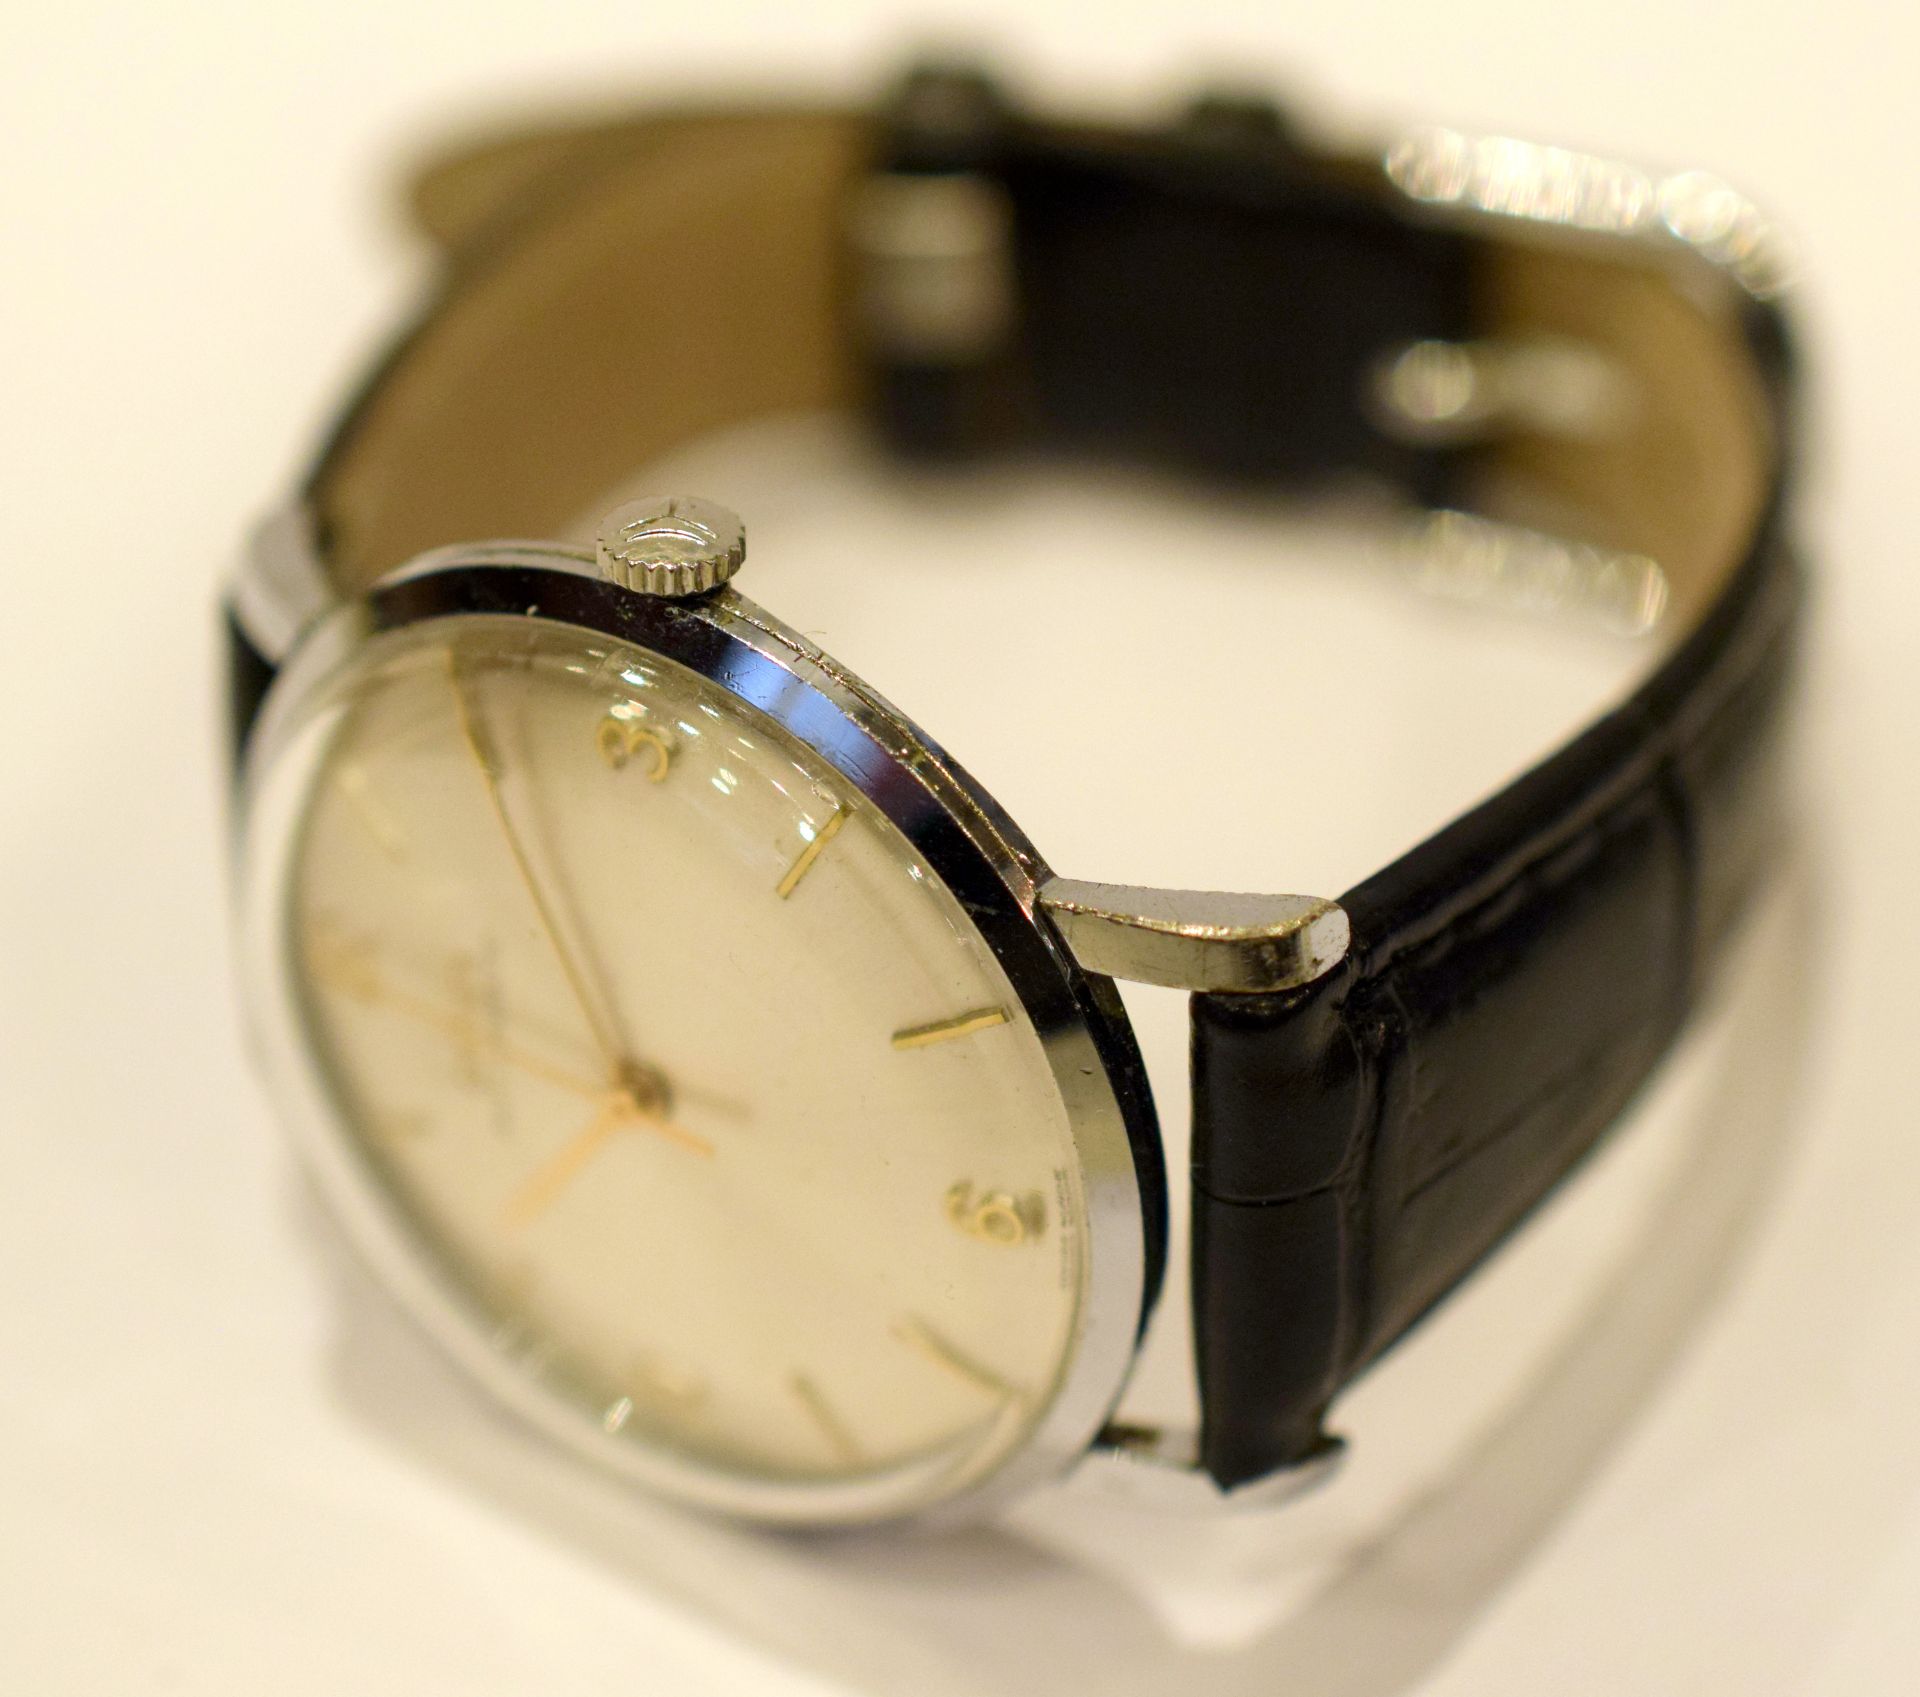 Scarce Doxa Gentleman's Wristwatch - Image 3 of 5